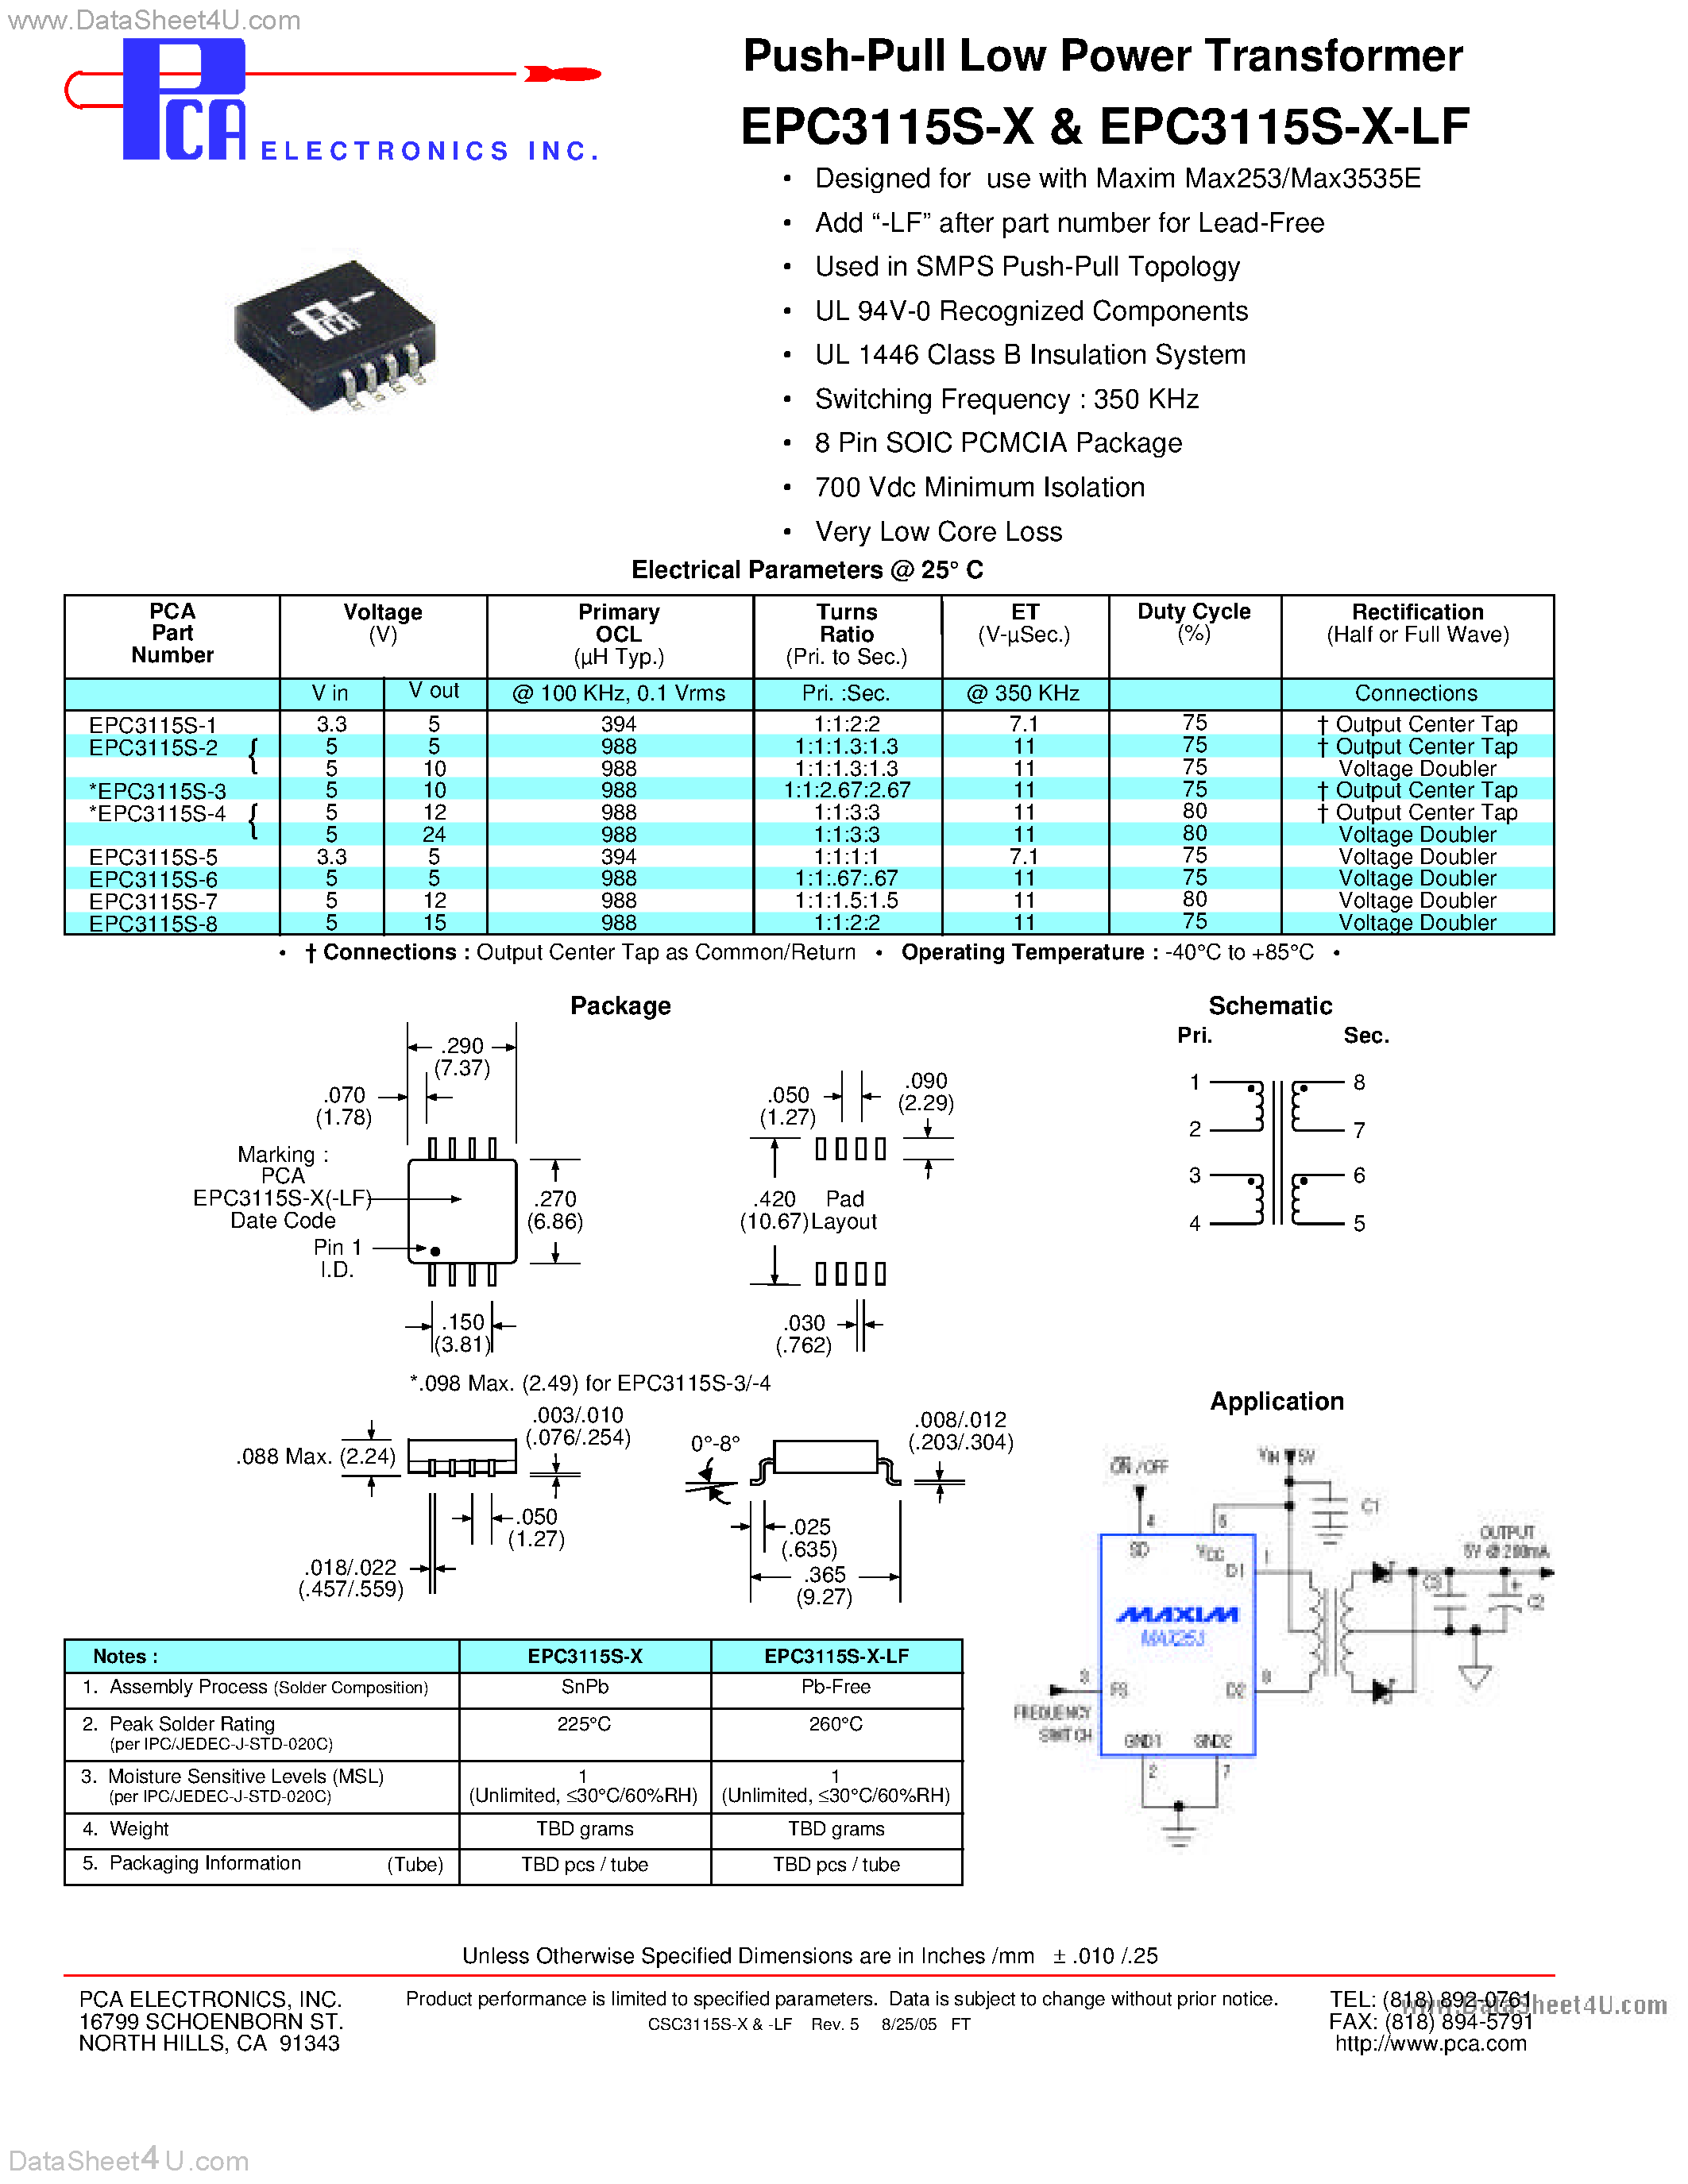 Datasheet EPC3115S-x - (EPC3115S-x / EPC3115S-x-LF) Push-Pull Low Power Transformer page 1